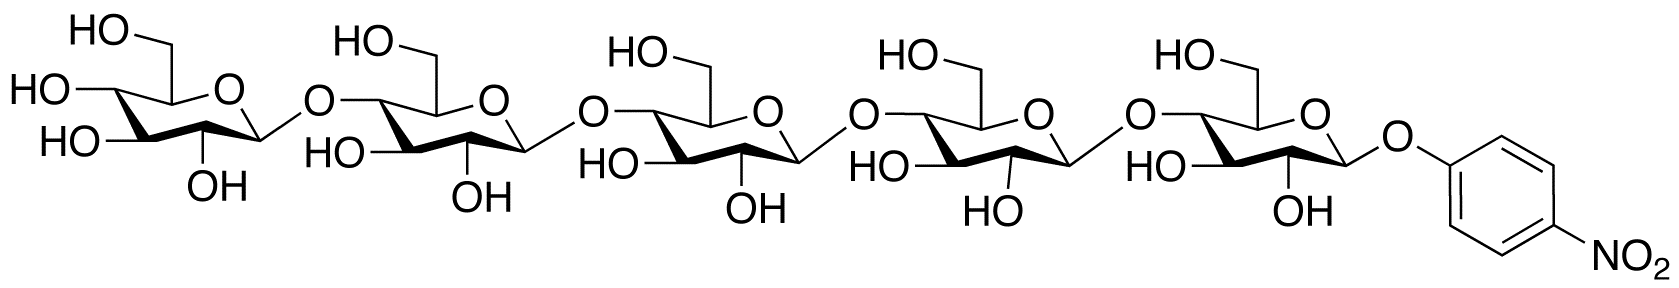 p-Nitrophenyl β-D-Cellopentaoside